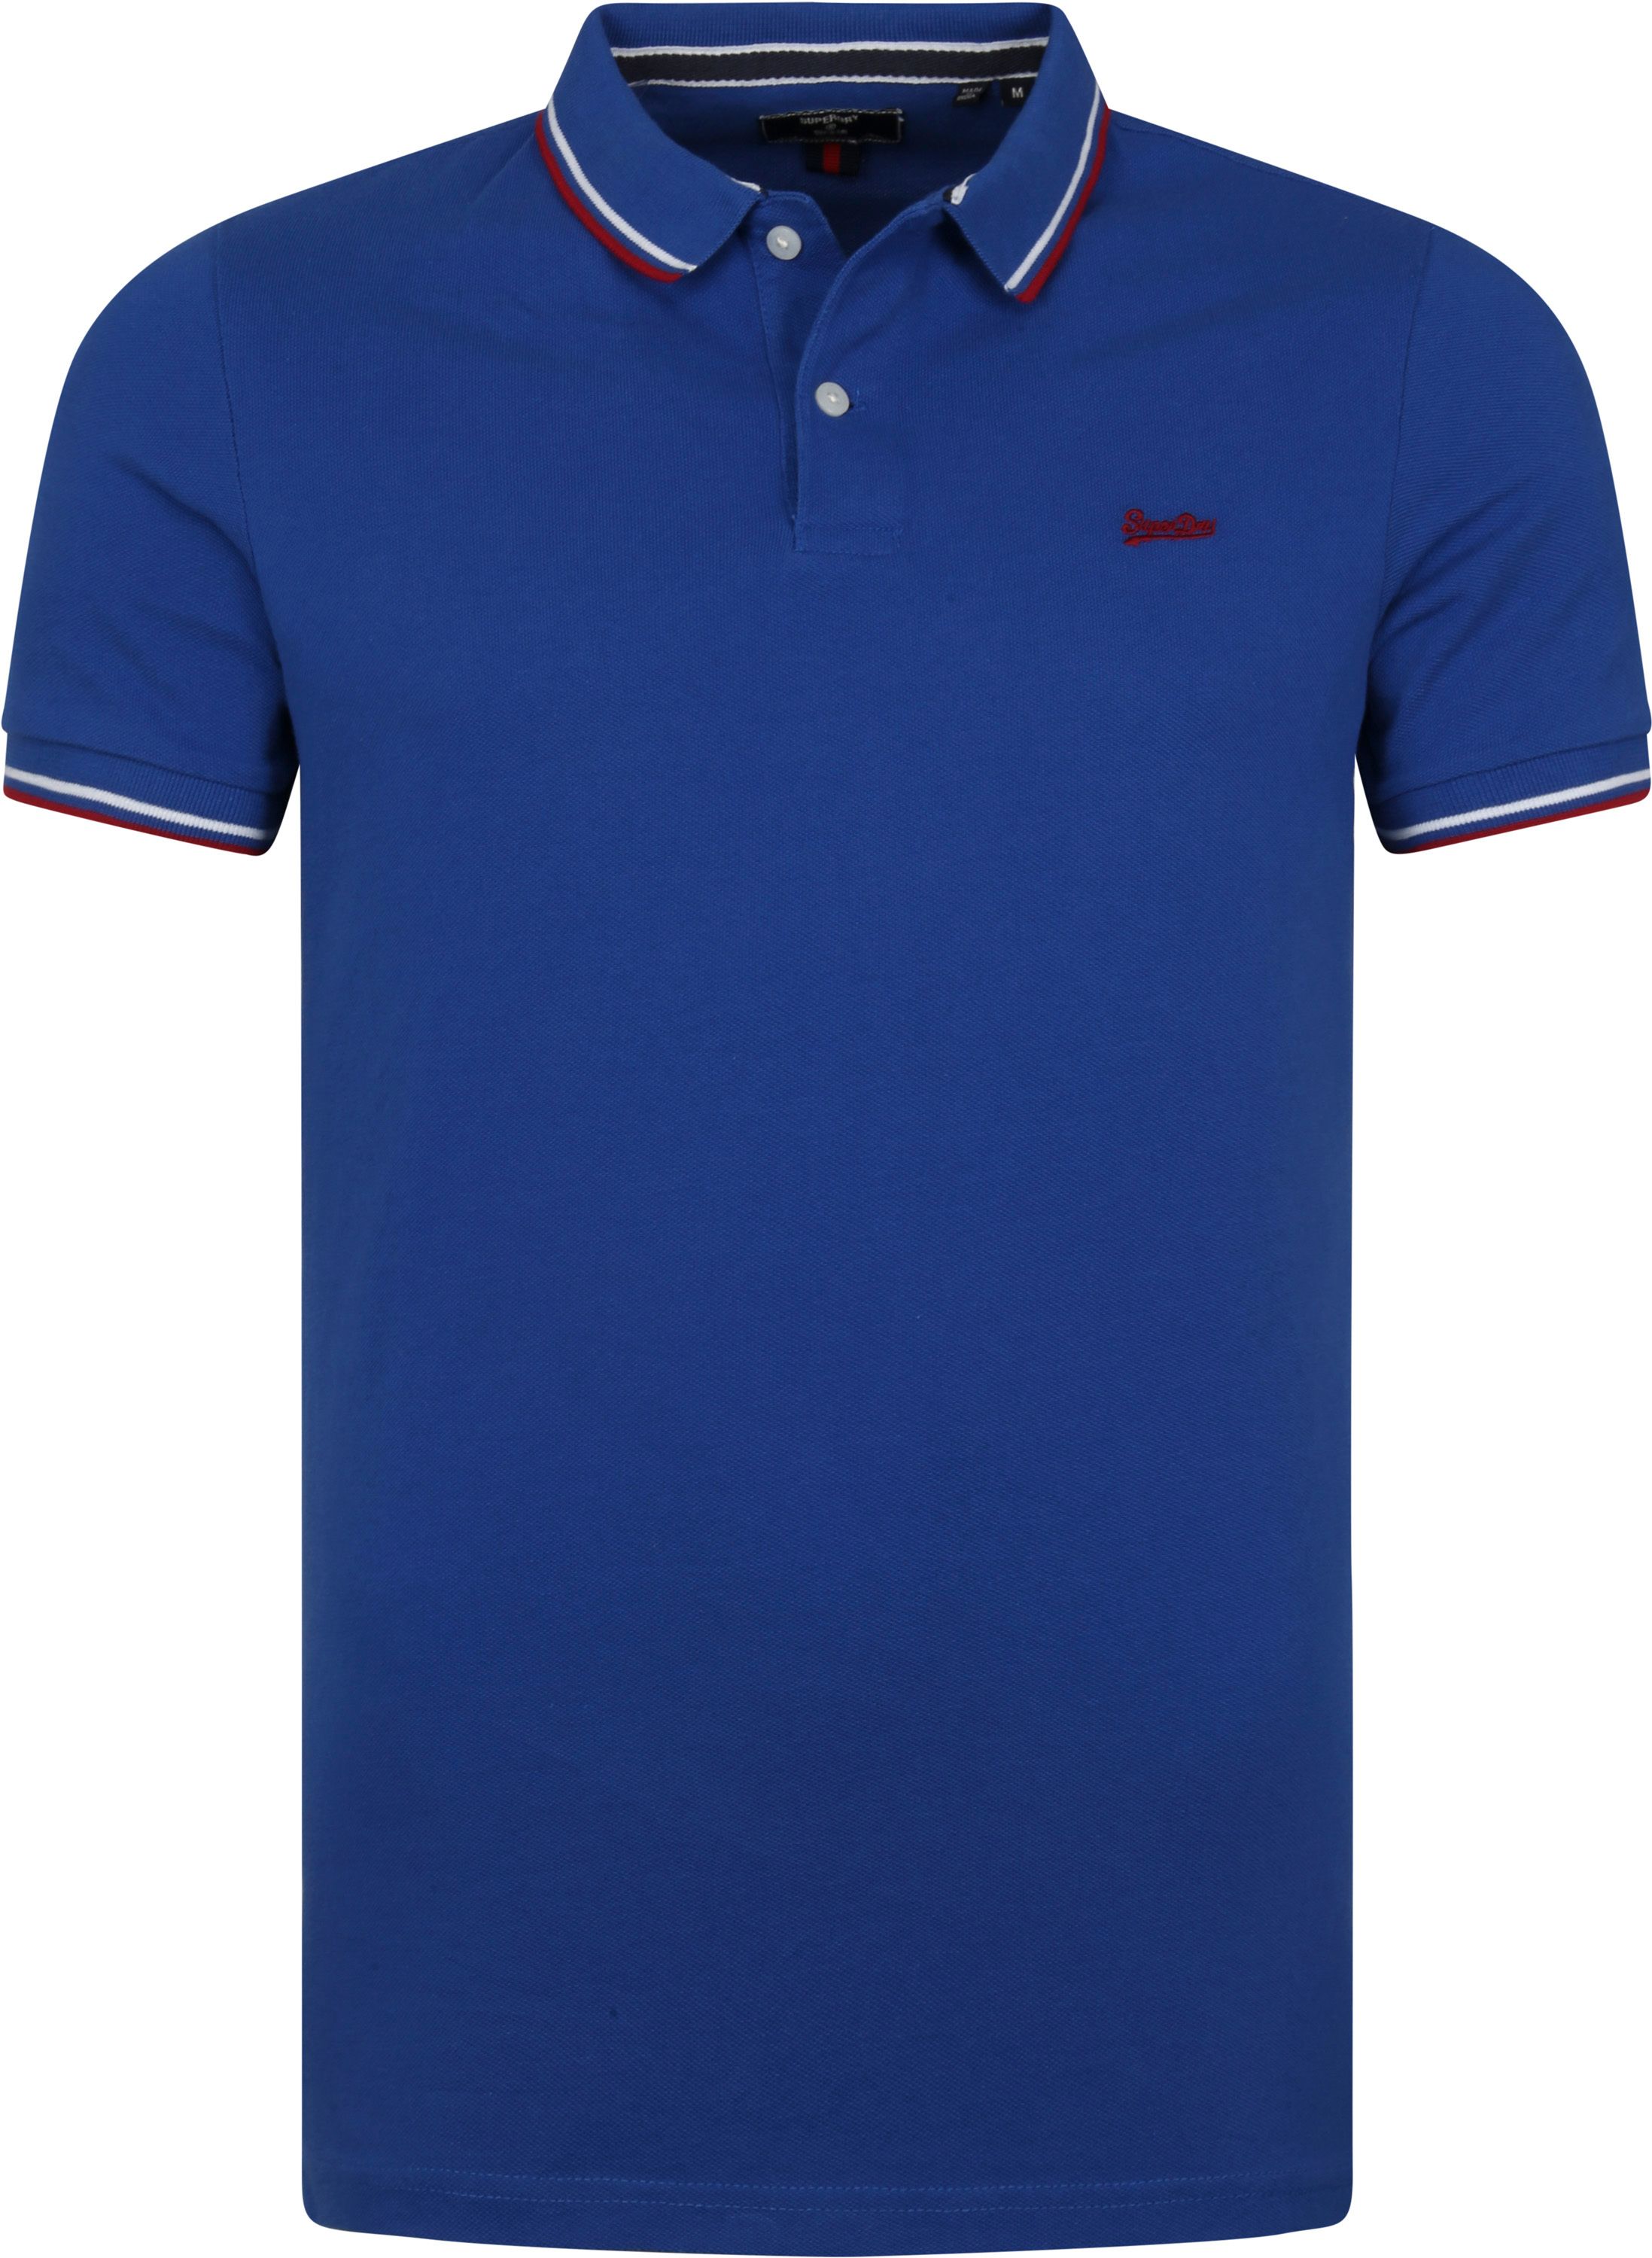 Superdry Classic Polo Shirt Pique Logo Blue Dark Blue size L